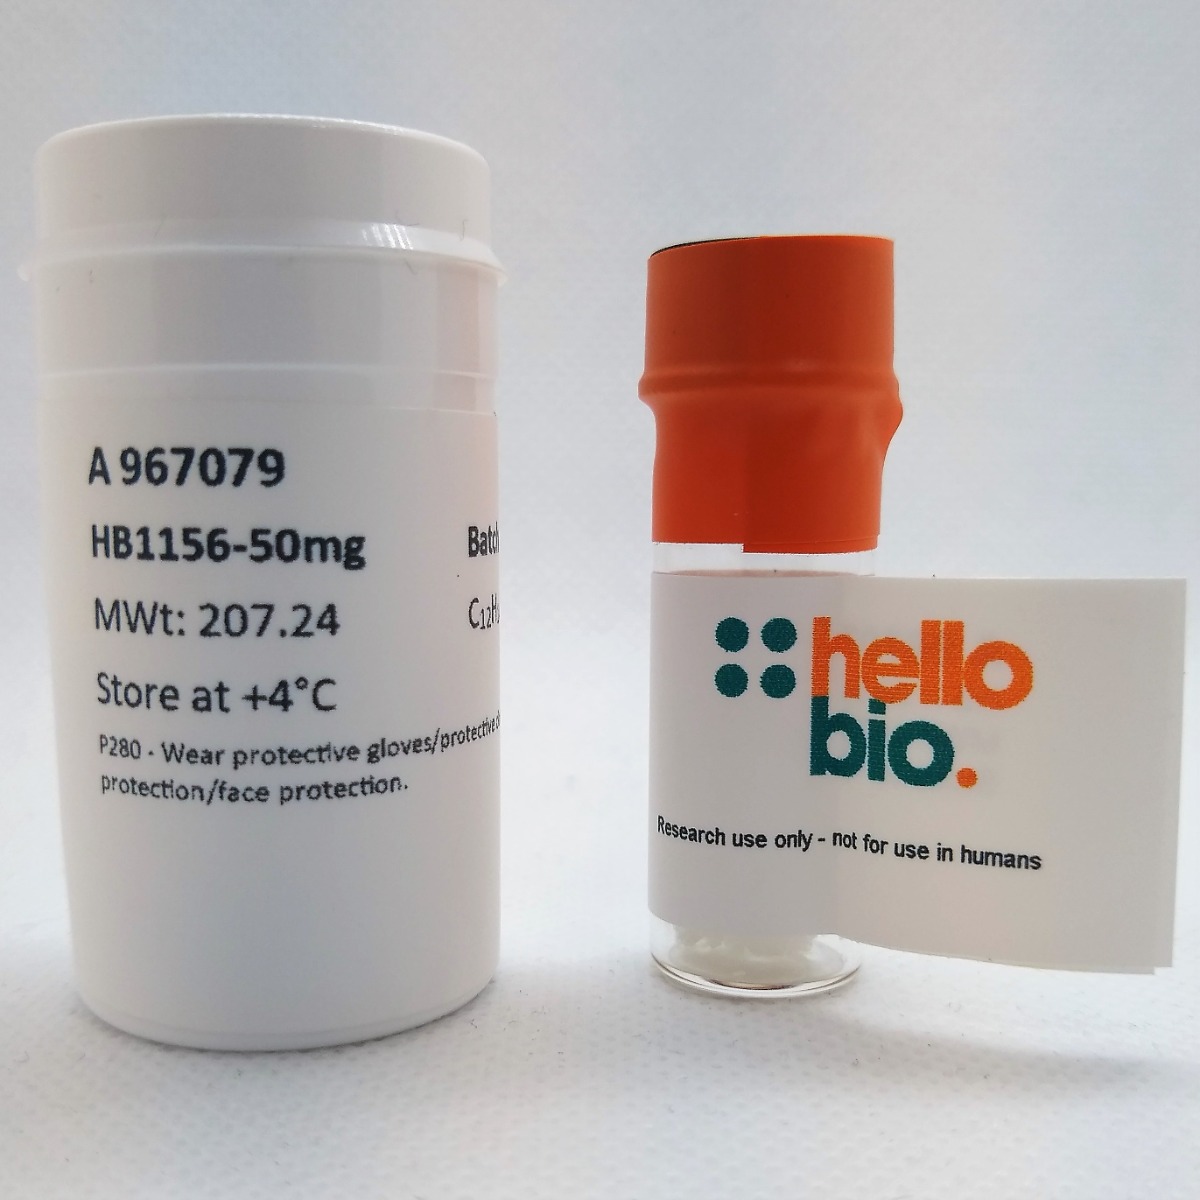 A 967079 product vial image | Hello Bio